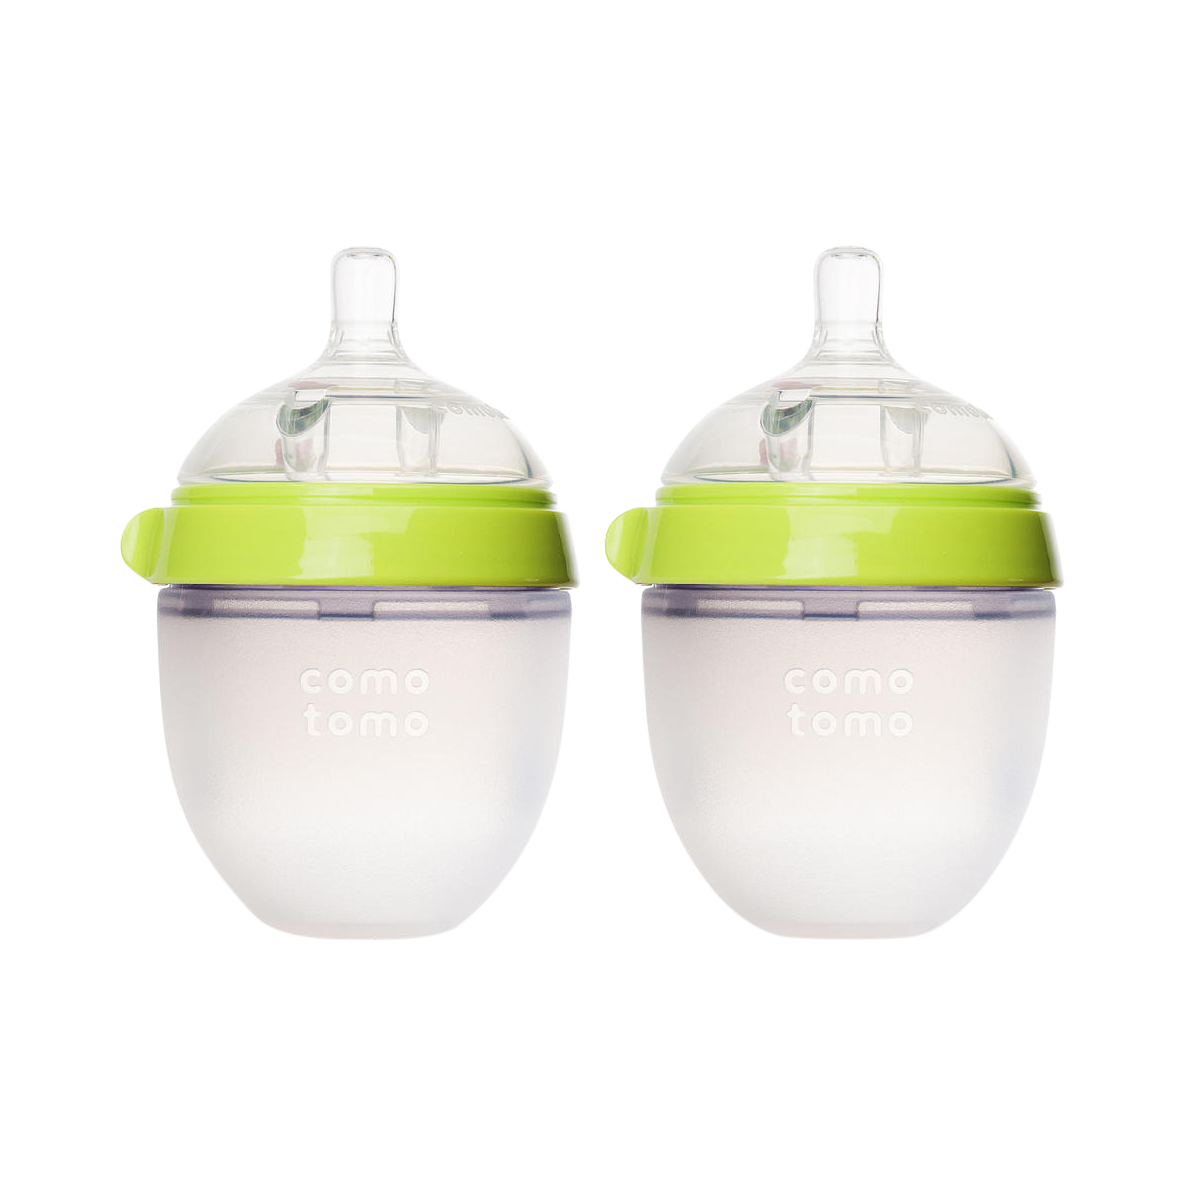 comotomo bottle for breastfed babies